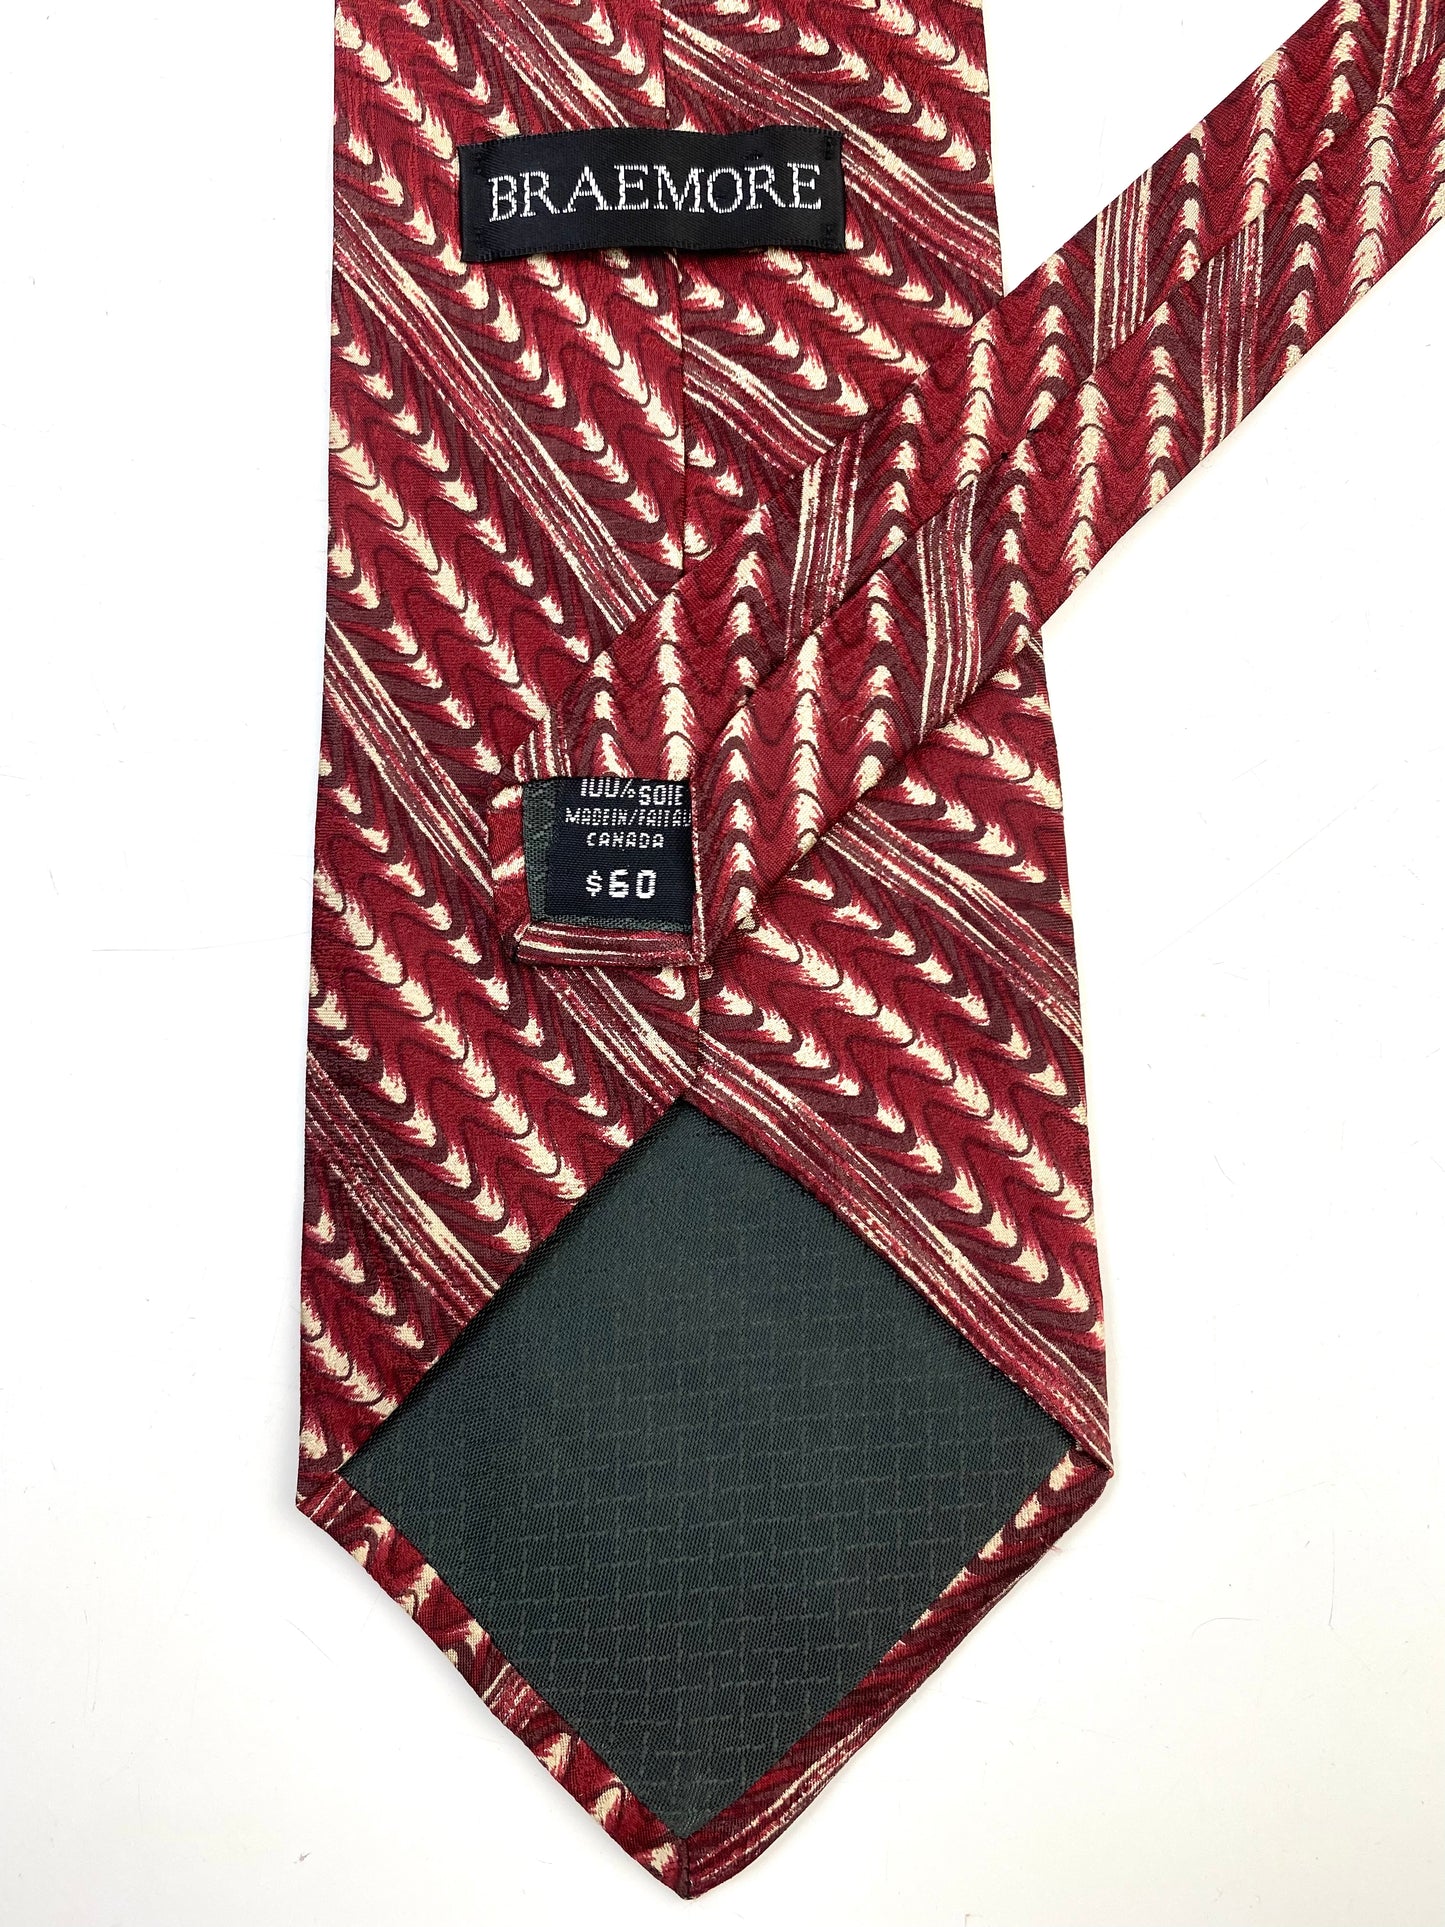 90s Deadstock Silk Necktie, Vintage Wine Diagonal Stripe Waves Pattern Tie, NOS